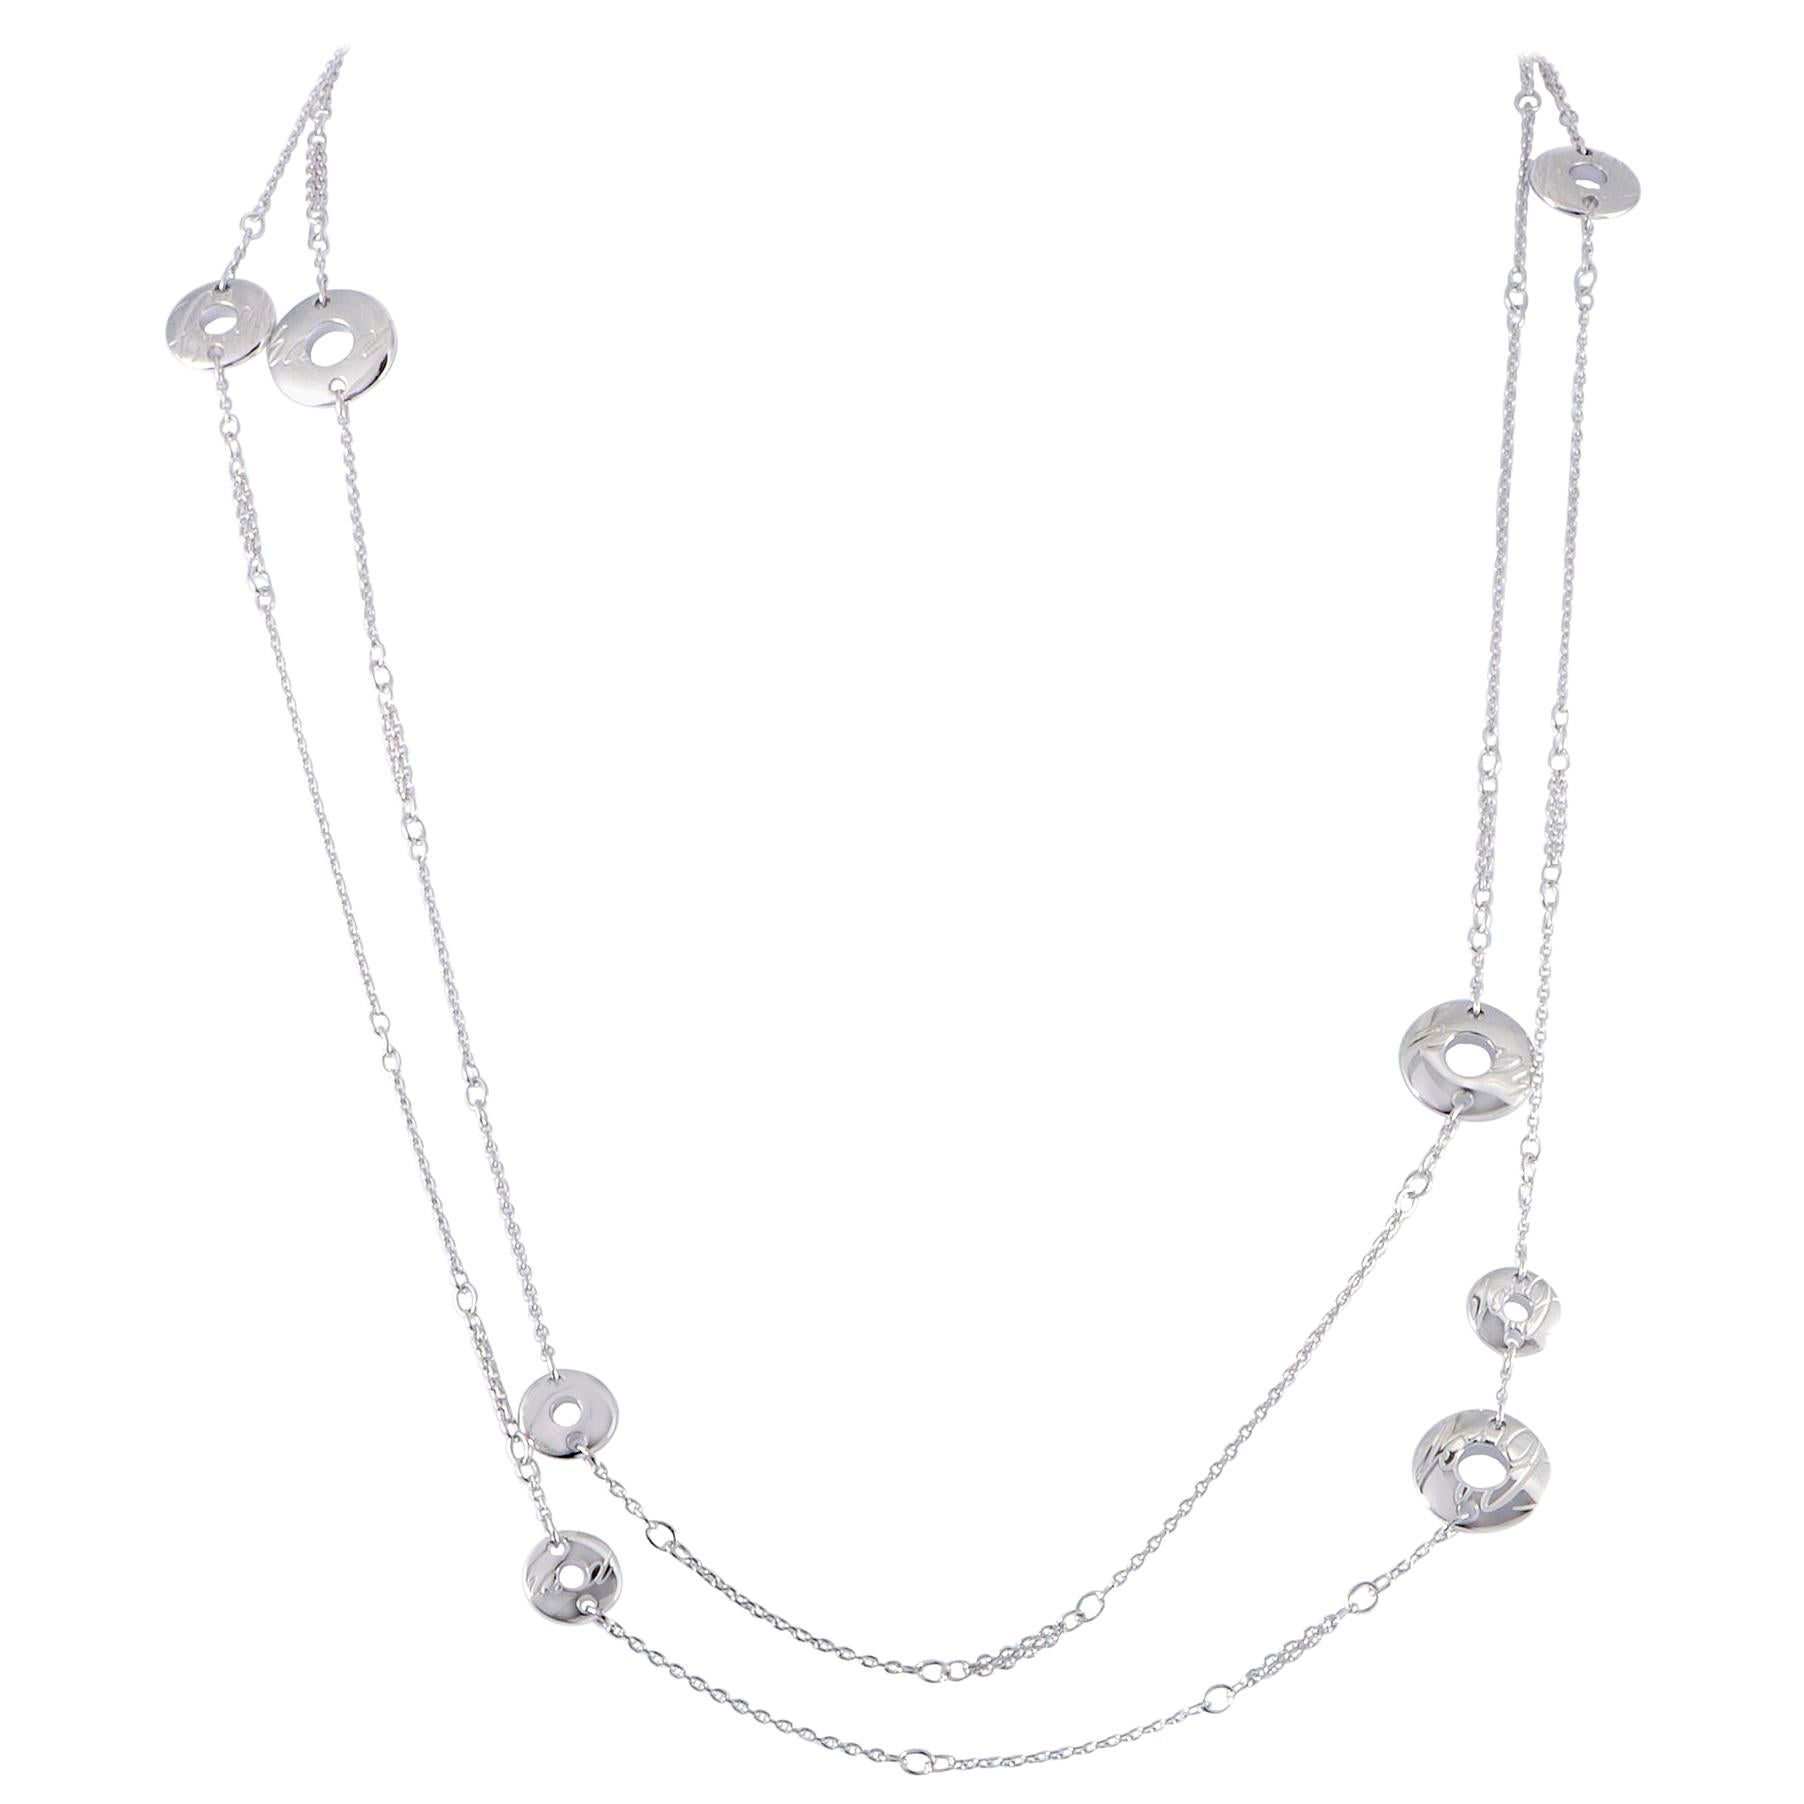 Chopard Chopardissimo 18 Karat White Long Sautoir Necklace